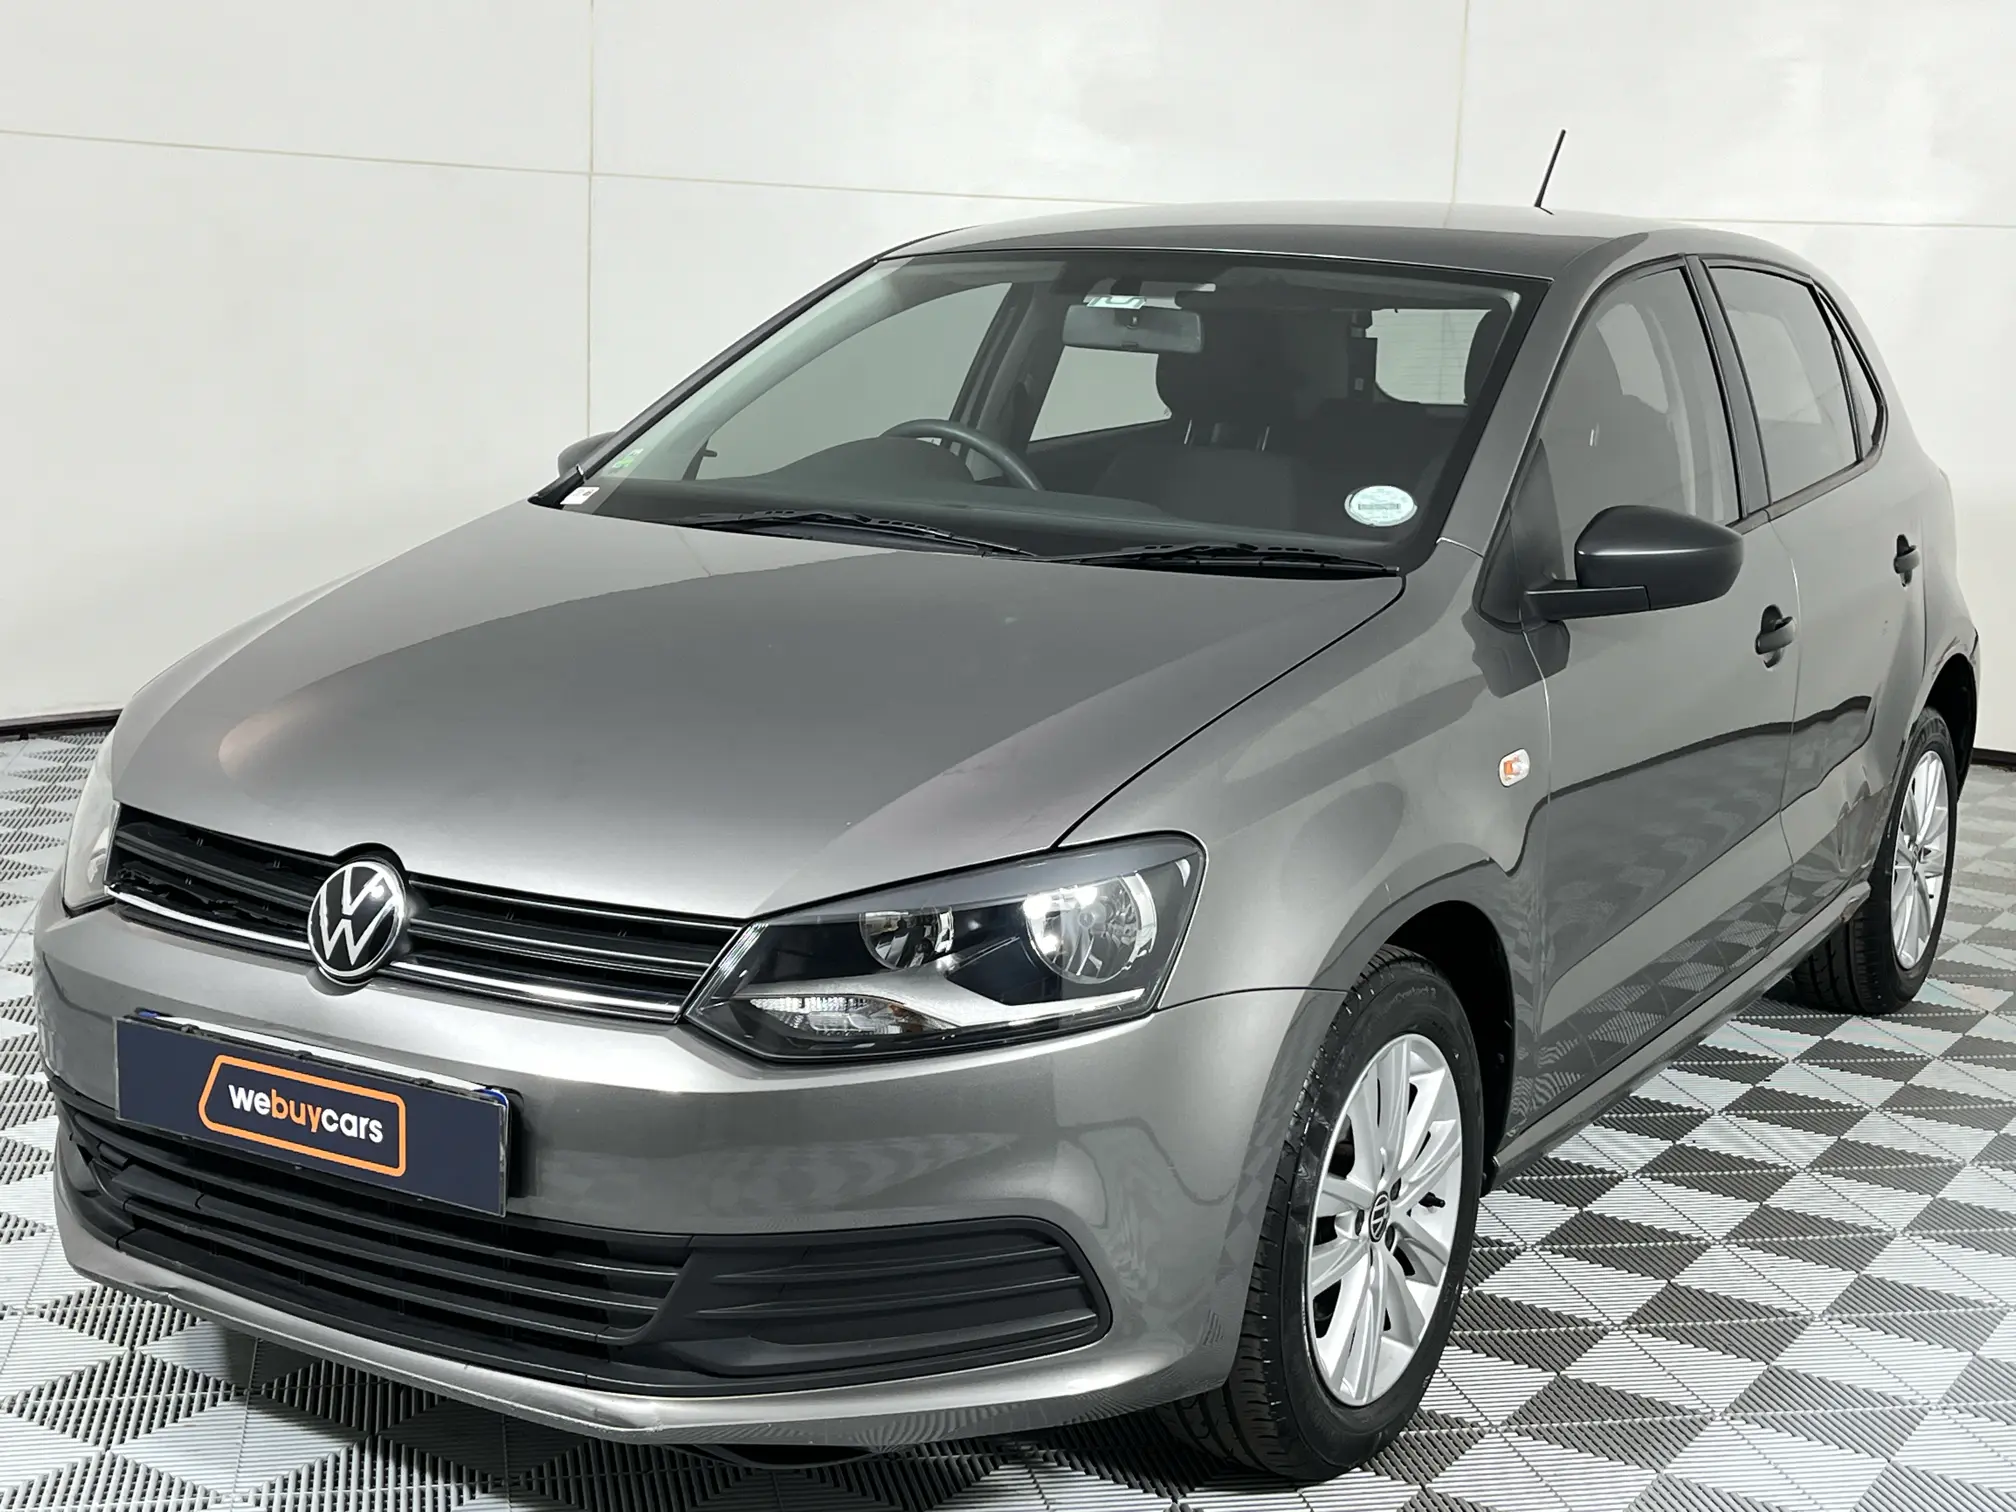 2021 Volkswagen Polo Vivo 1.4 Trendline (5dr)